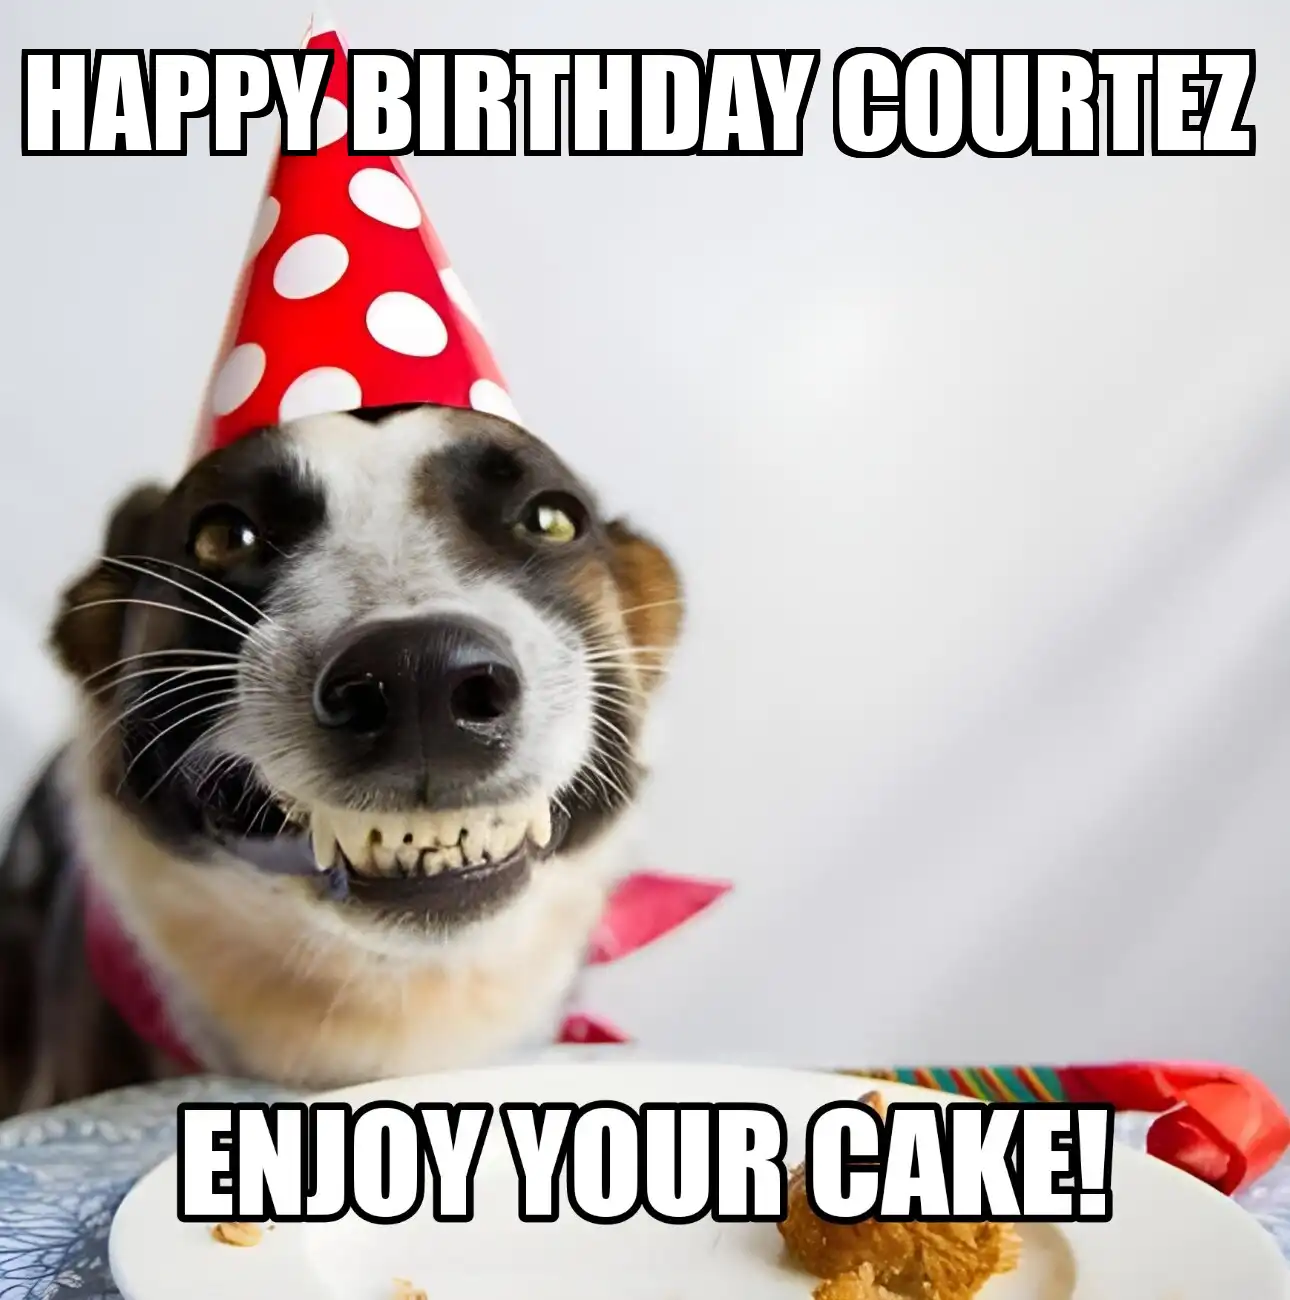 Happy Birthday Courtez Enjoy Your Cake Dog Meme